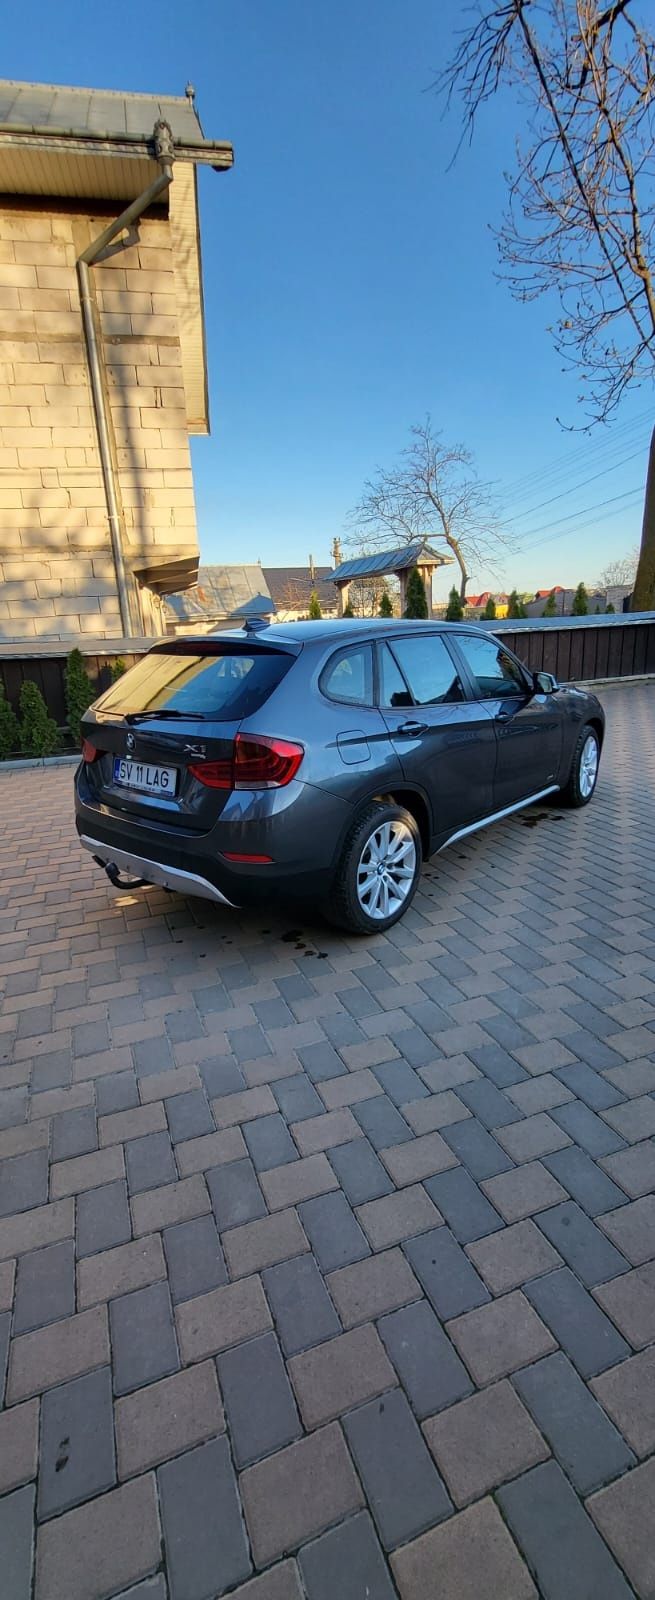 Vand BMW X1 an 2014 xDrive 18d